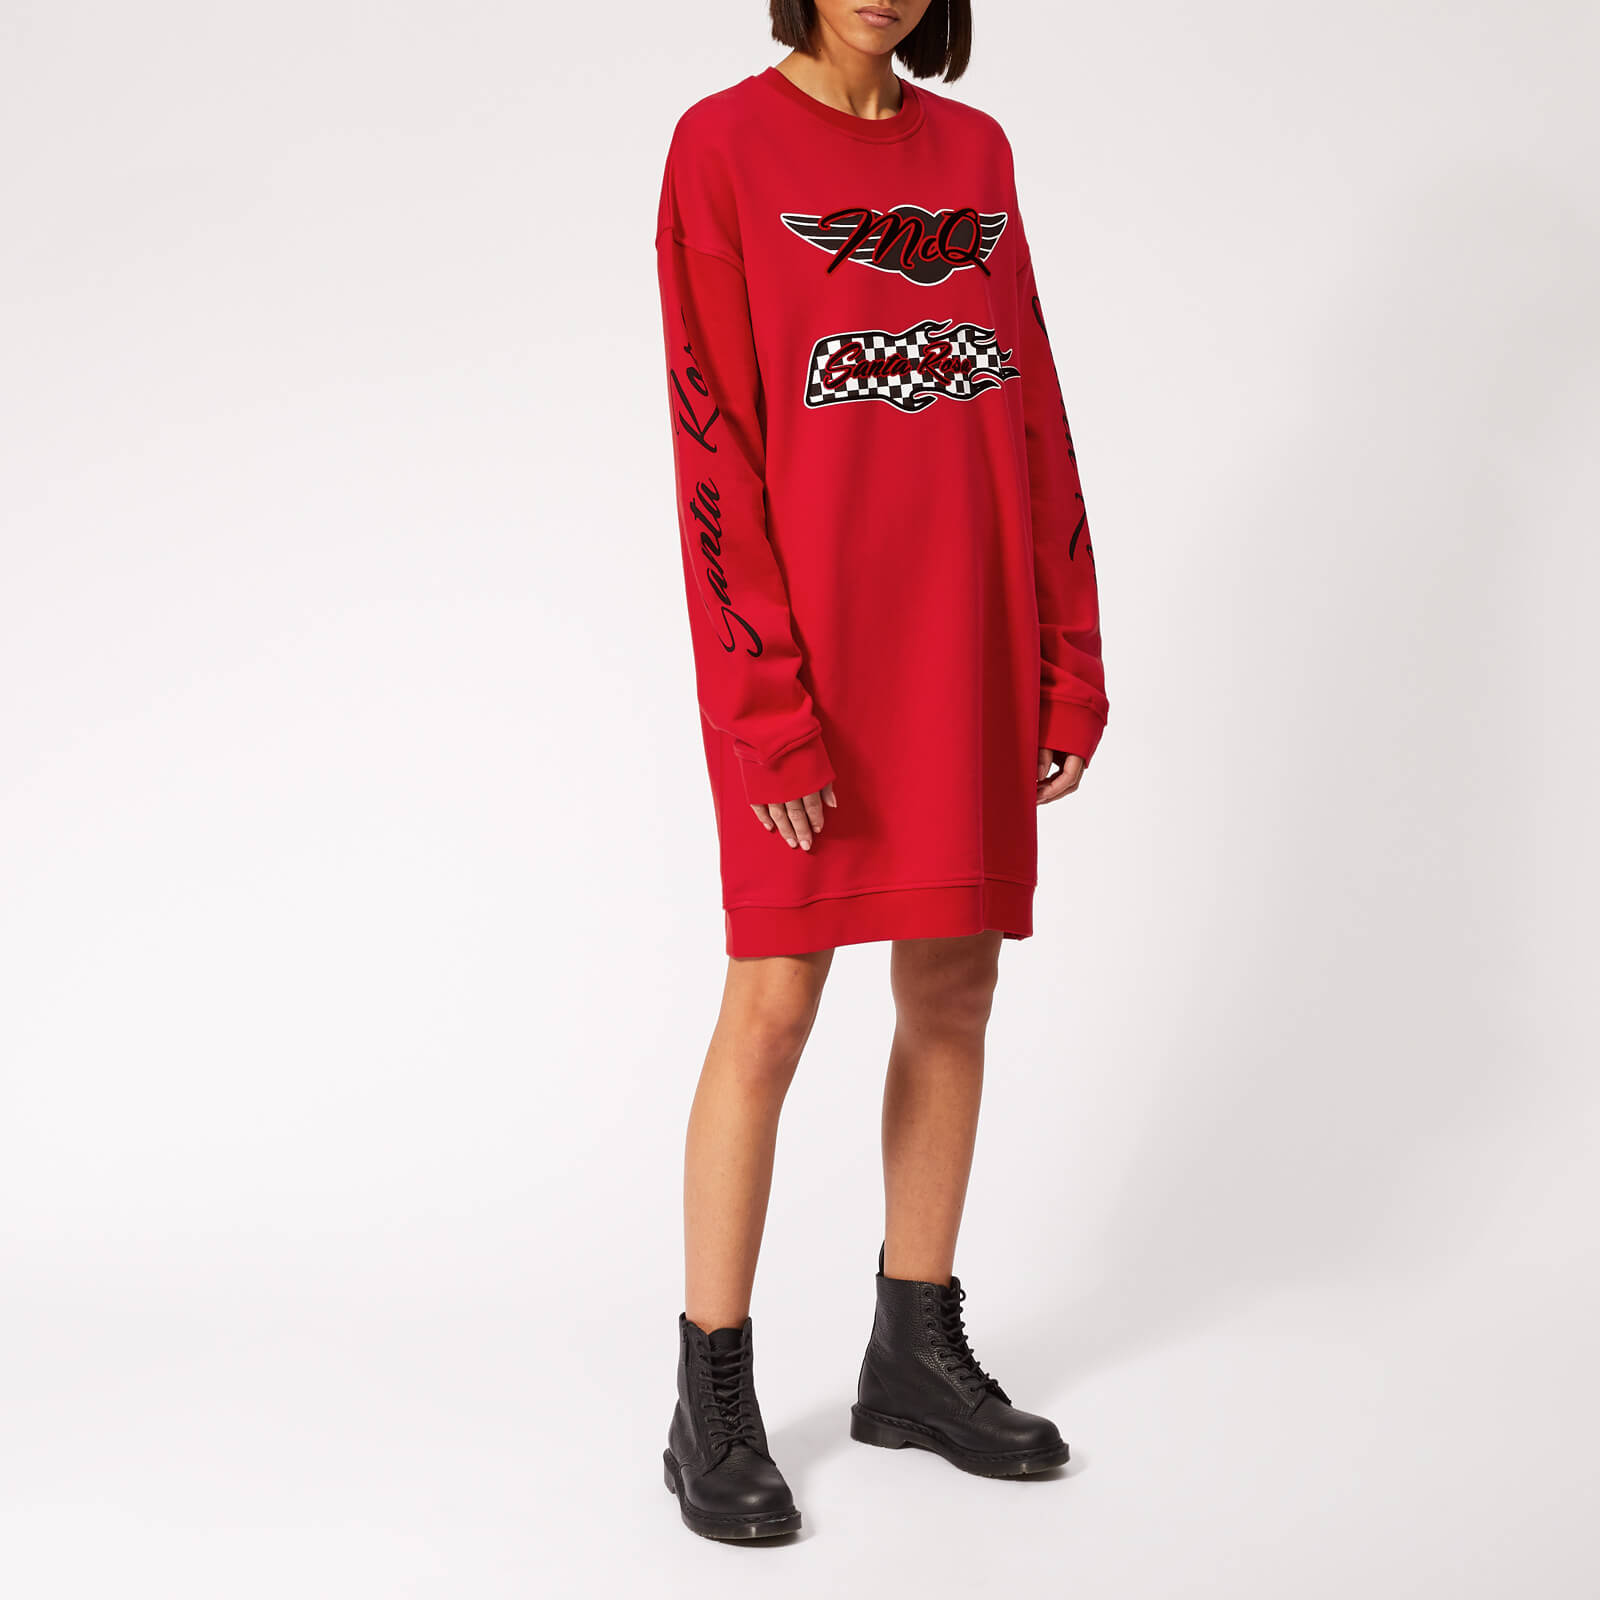 McQ Alexander McQueen Women's Slouchy Sweat Dress - Cadillac Red